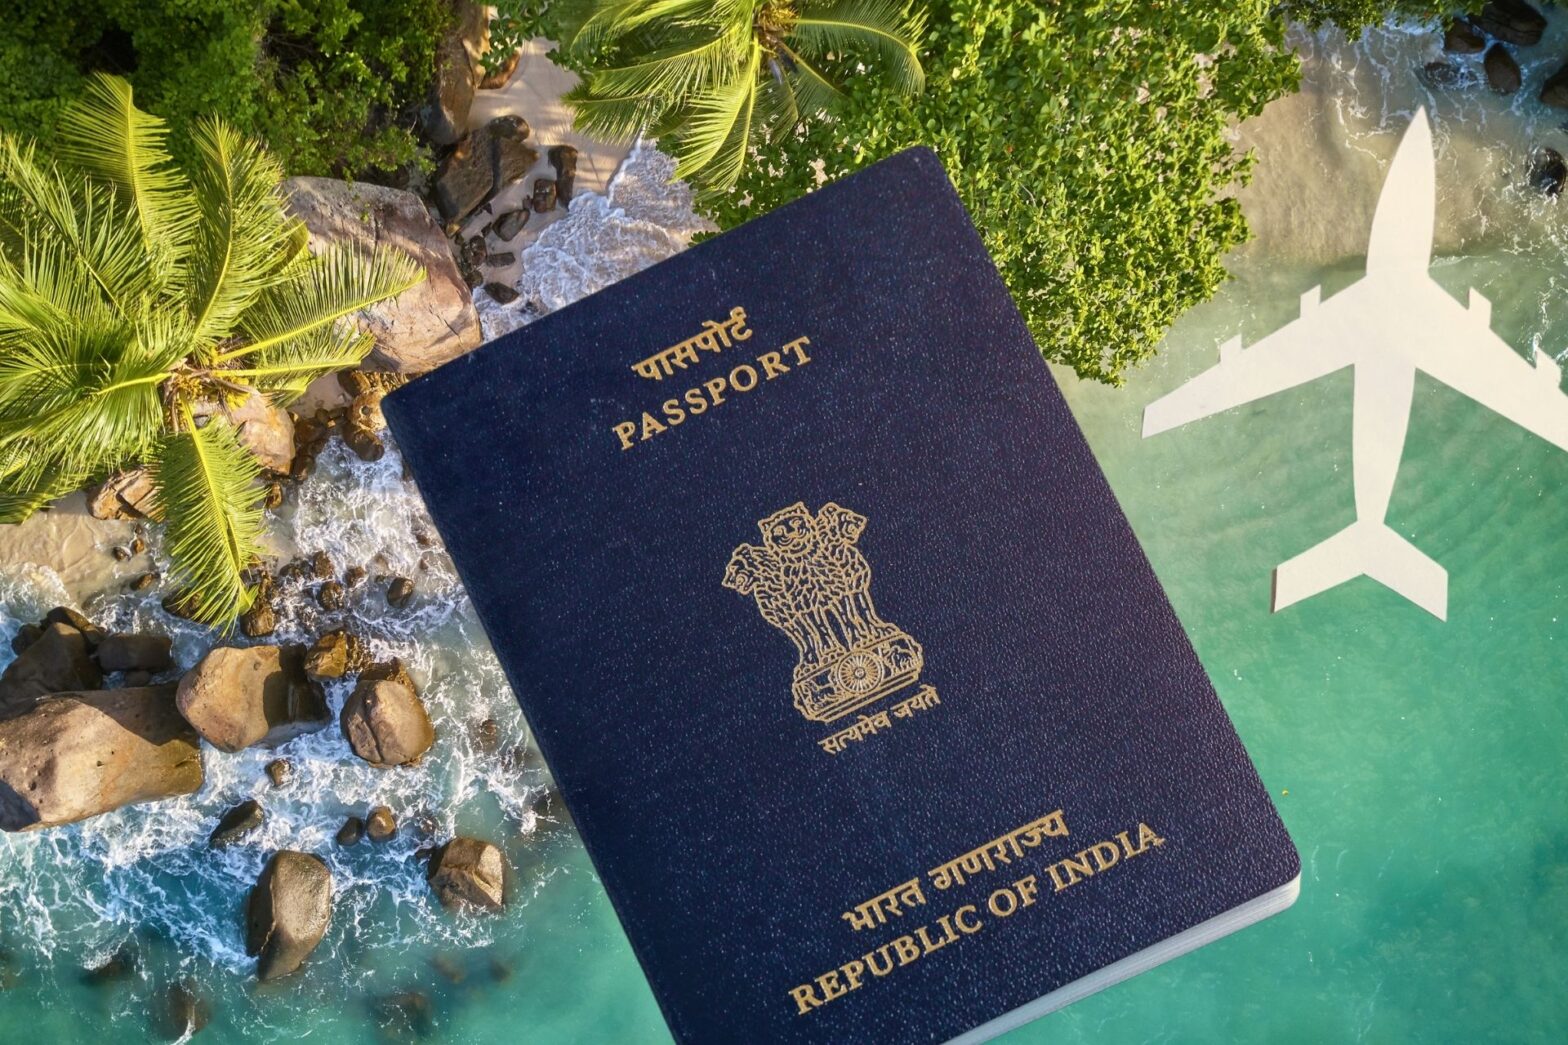 seychelles tourist visa for indian